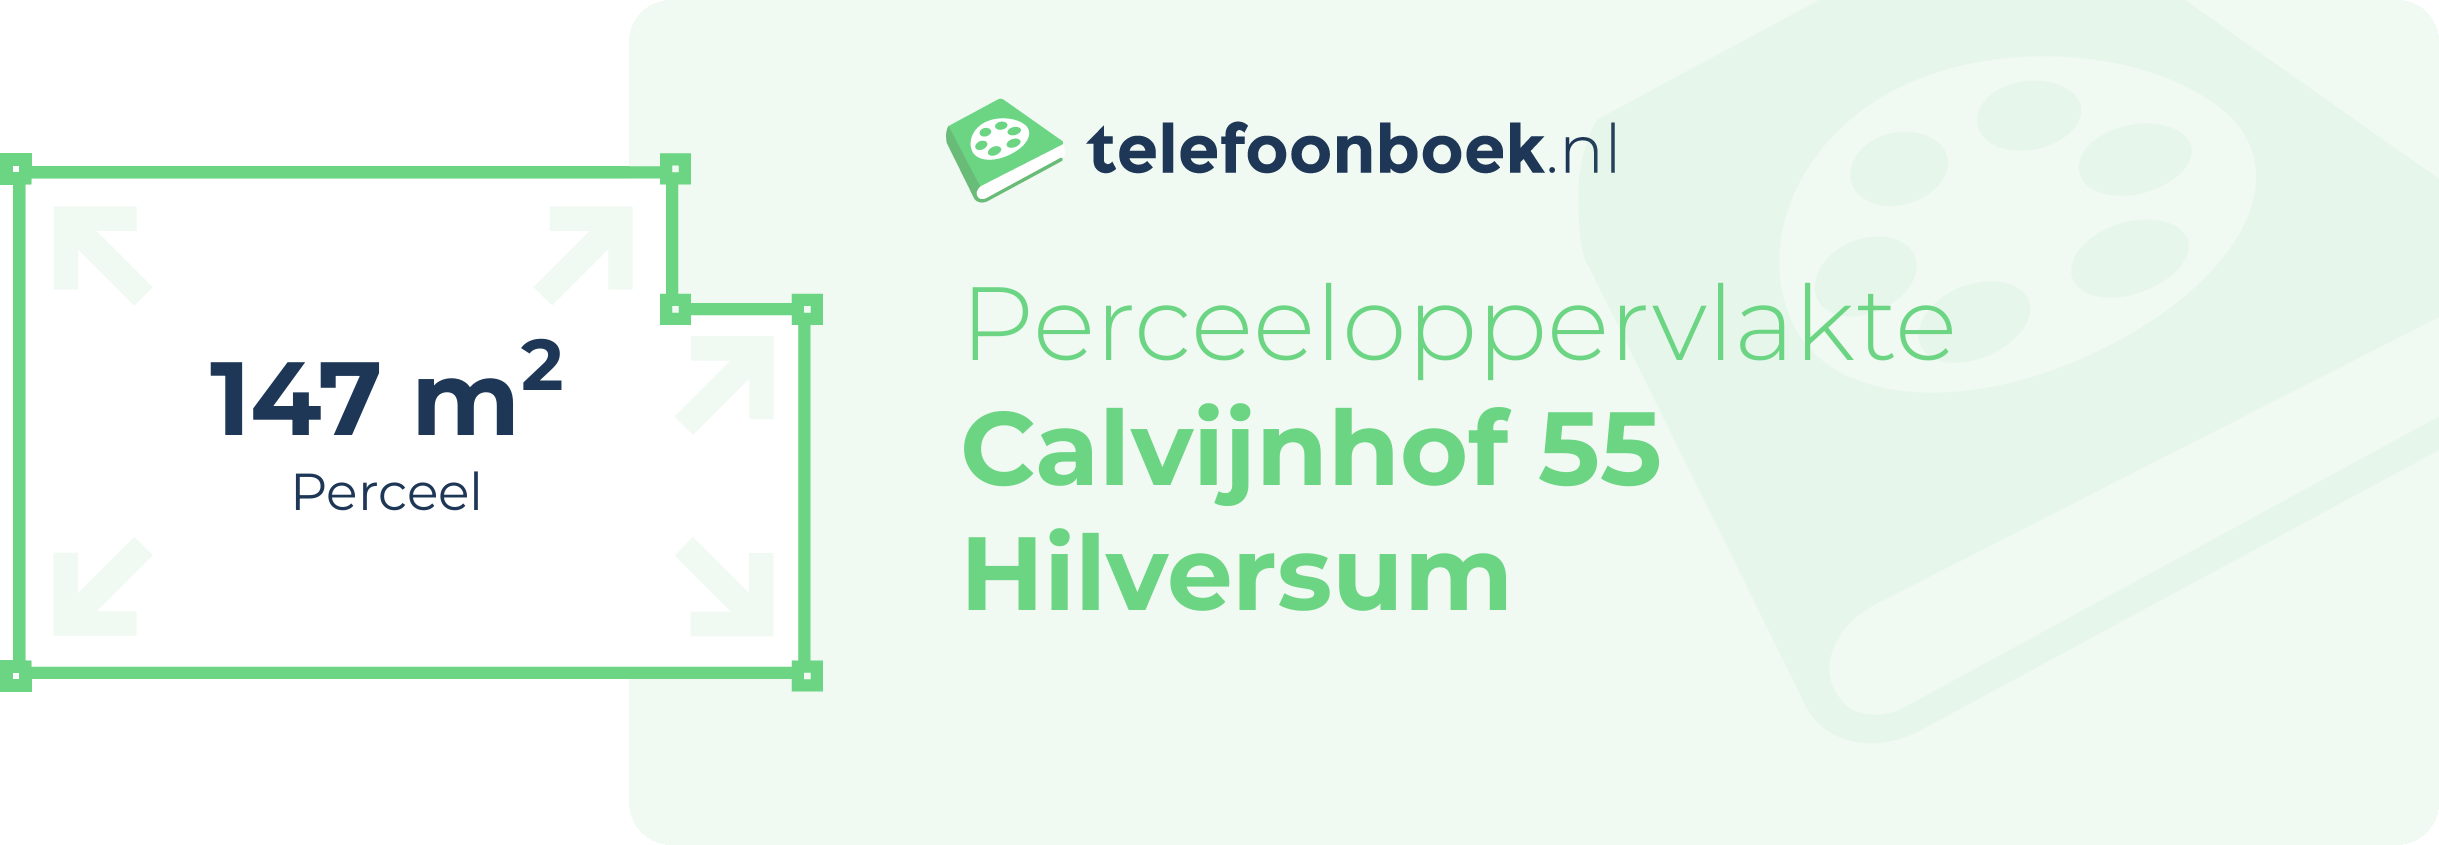 Perceeloppervlakte Calvijnhof 55 Hilversum